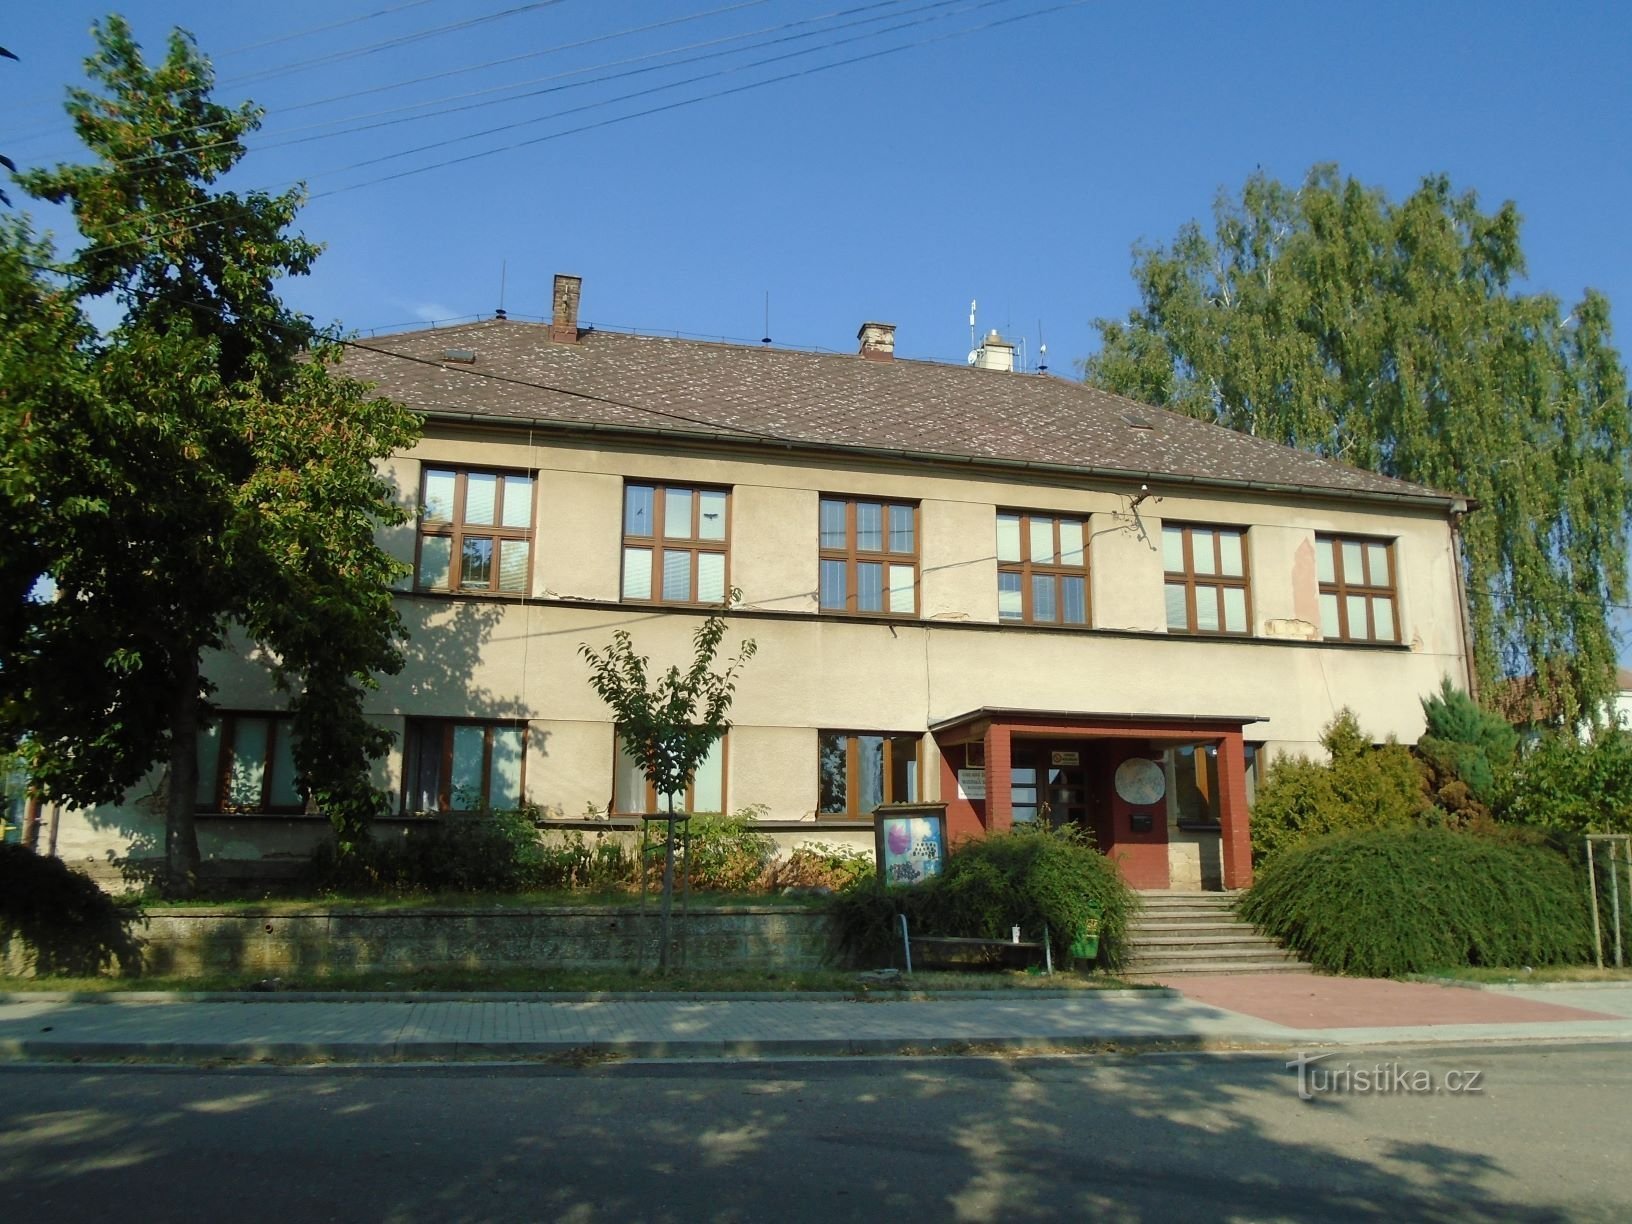 Iskola (Boharyně, 19.8.2018.)